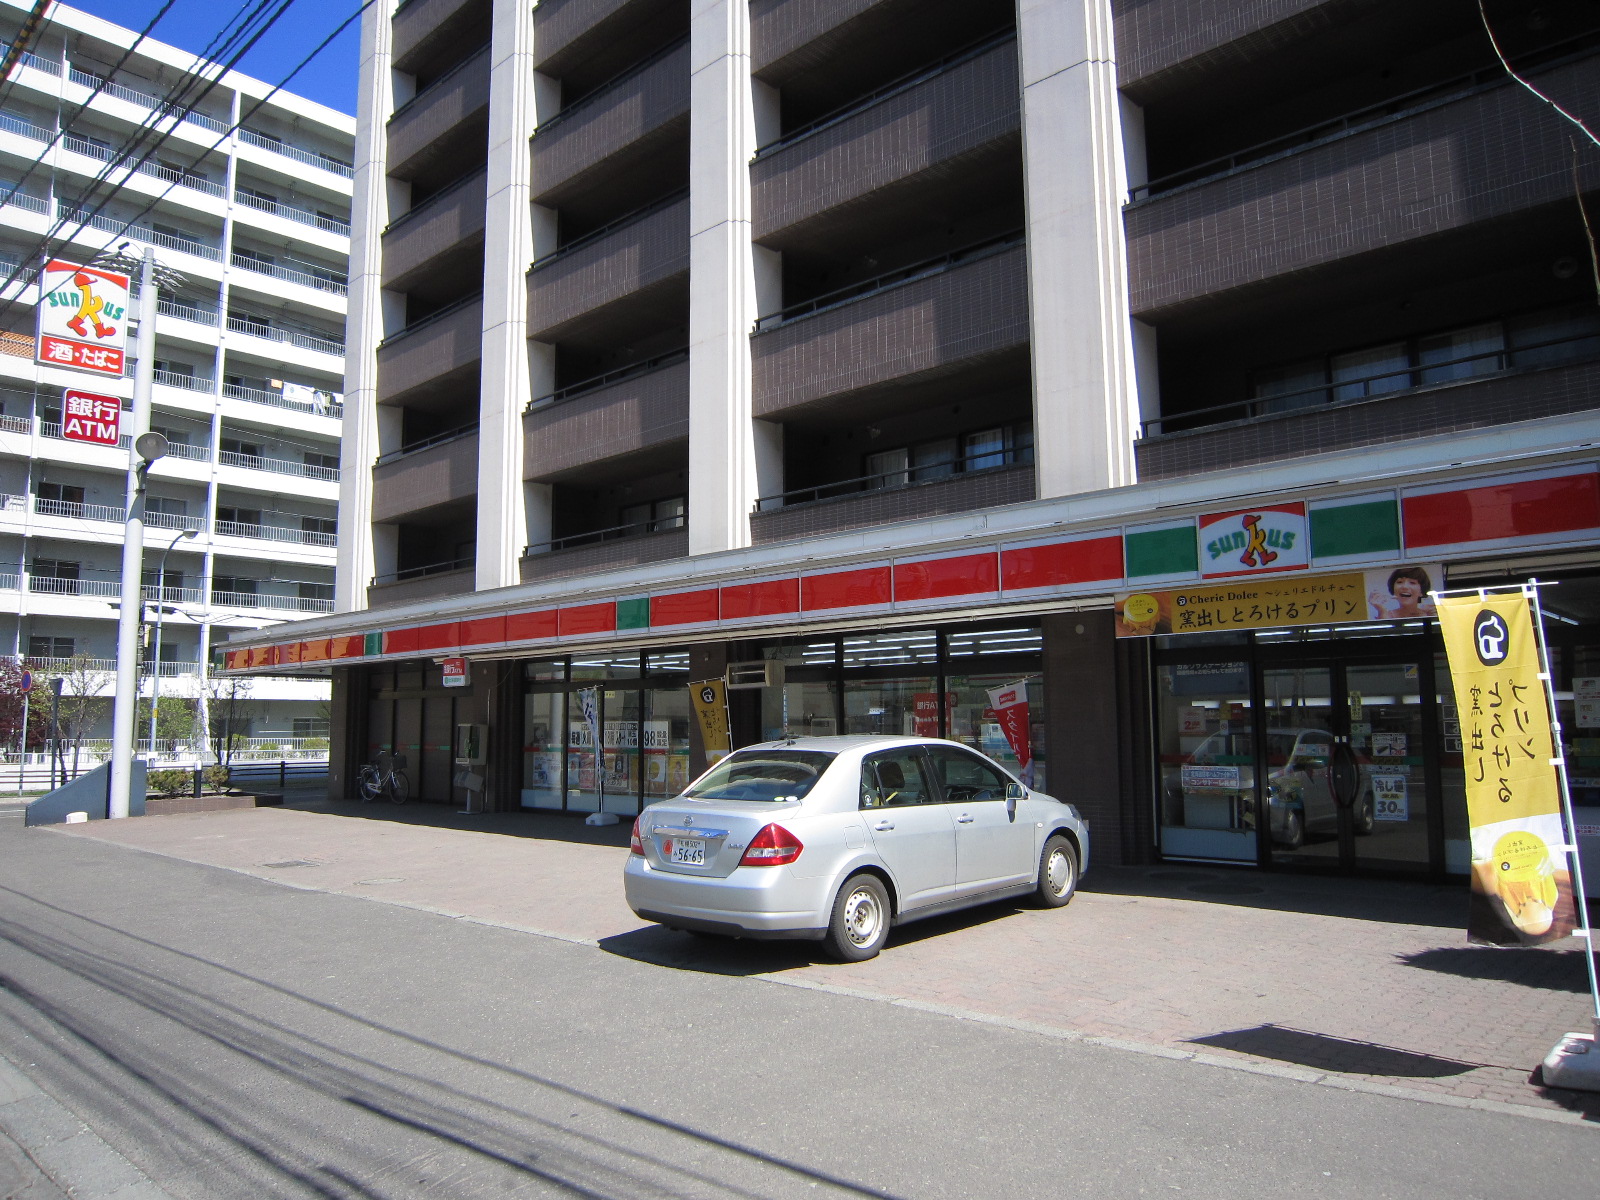 Convenience store. Thanks Kikusui Article 1 store up (convenience store) 305m